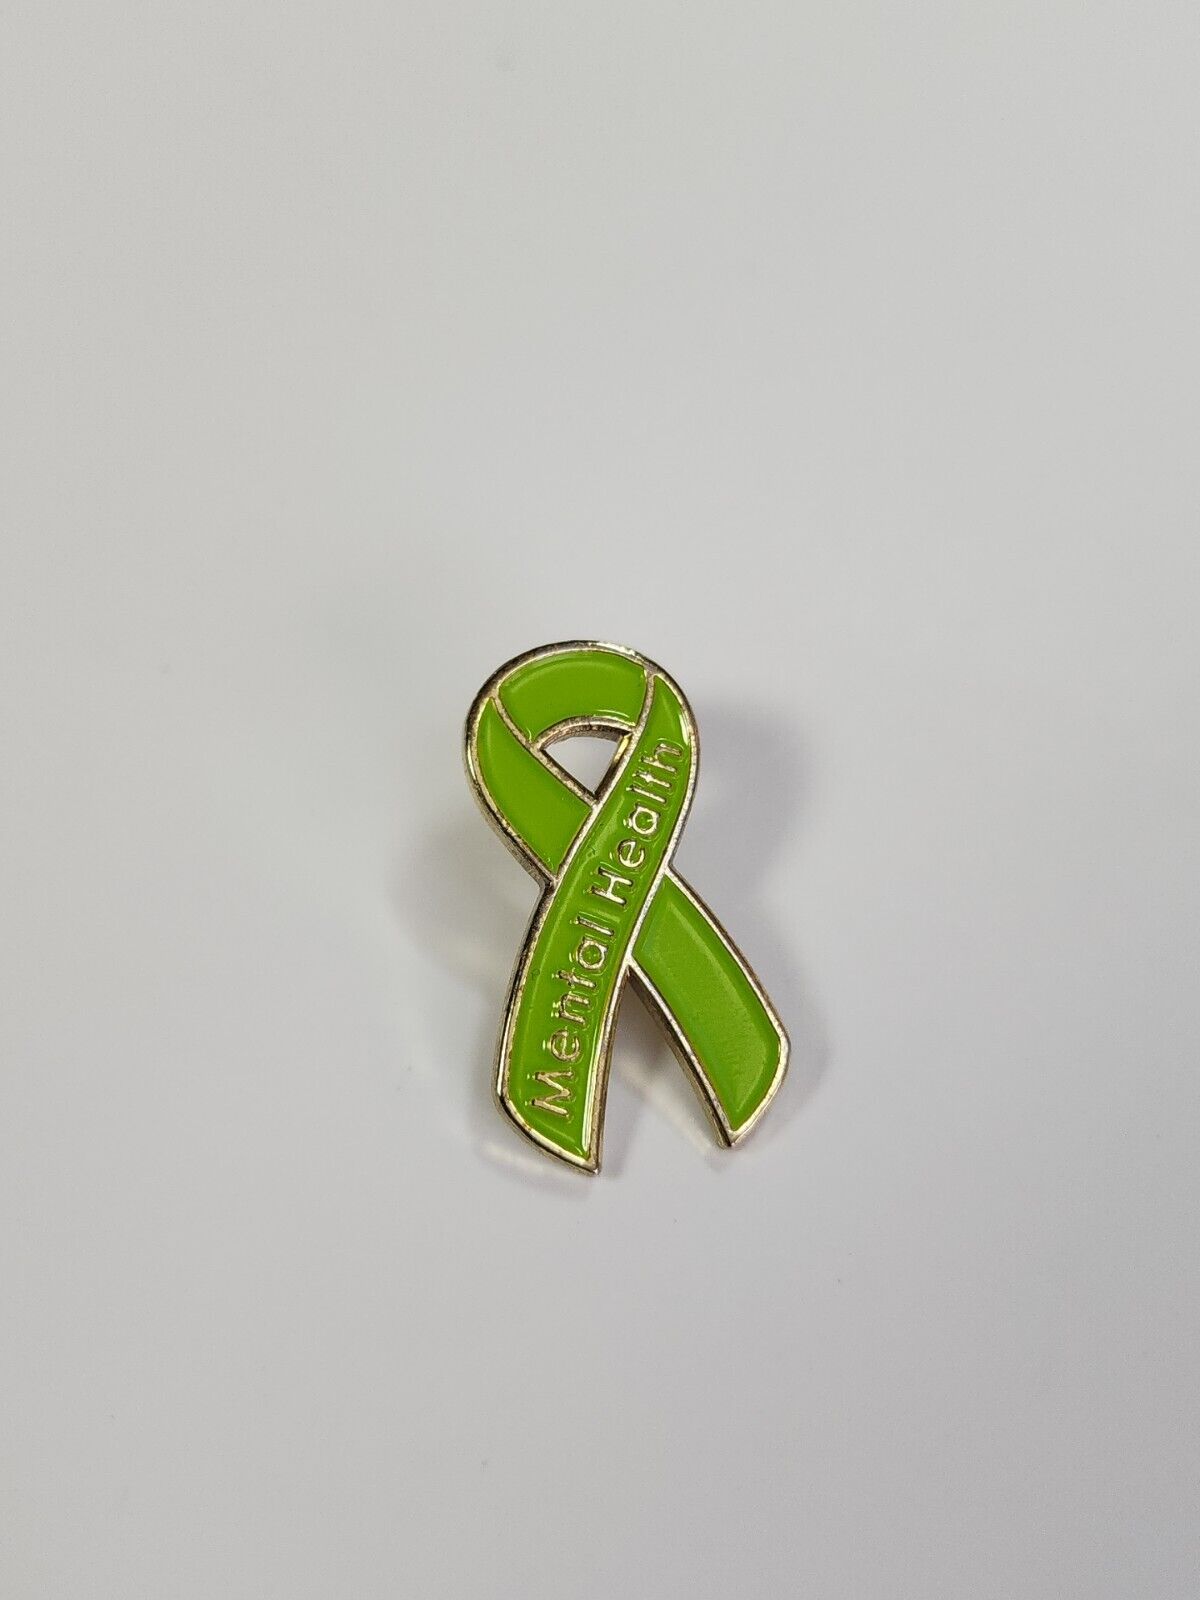 Mental Health Green Awareness Ribbon Lapel Pin